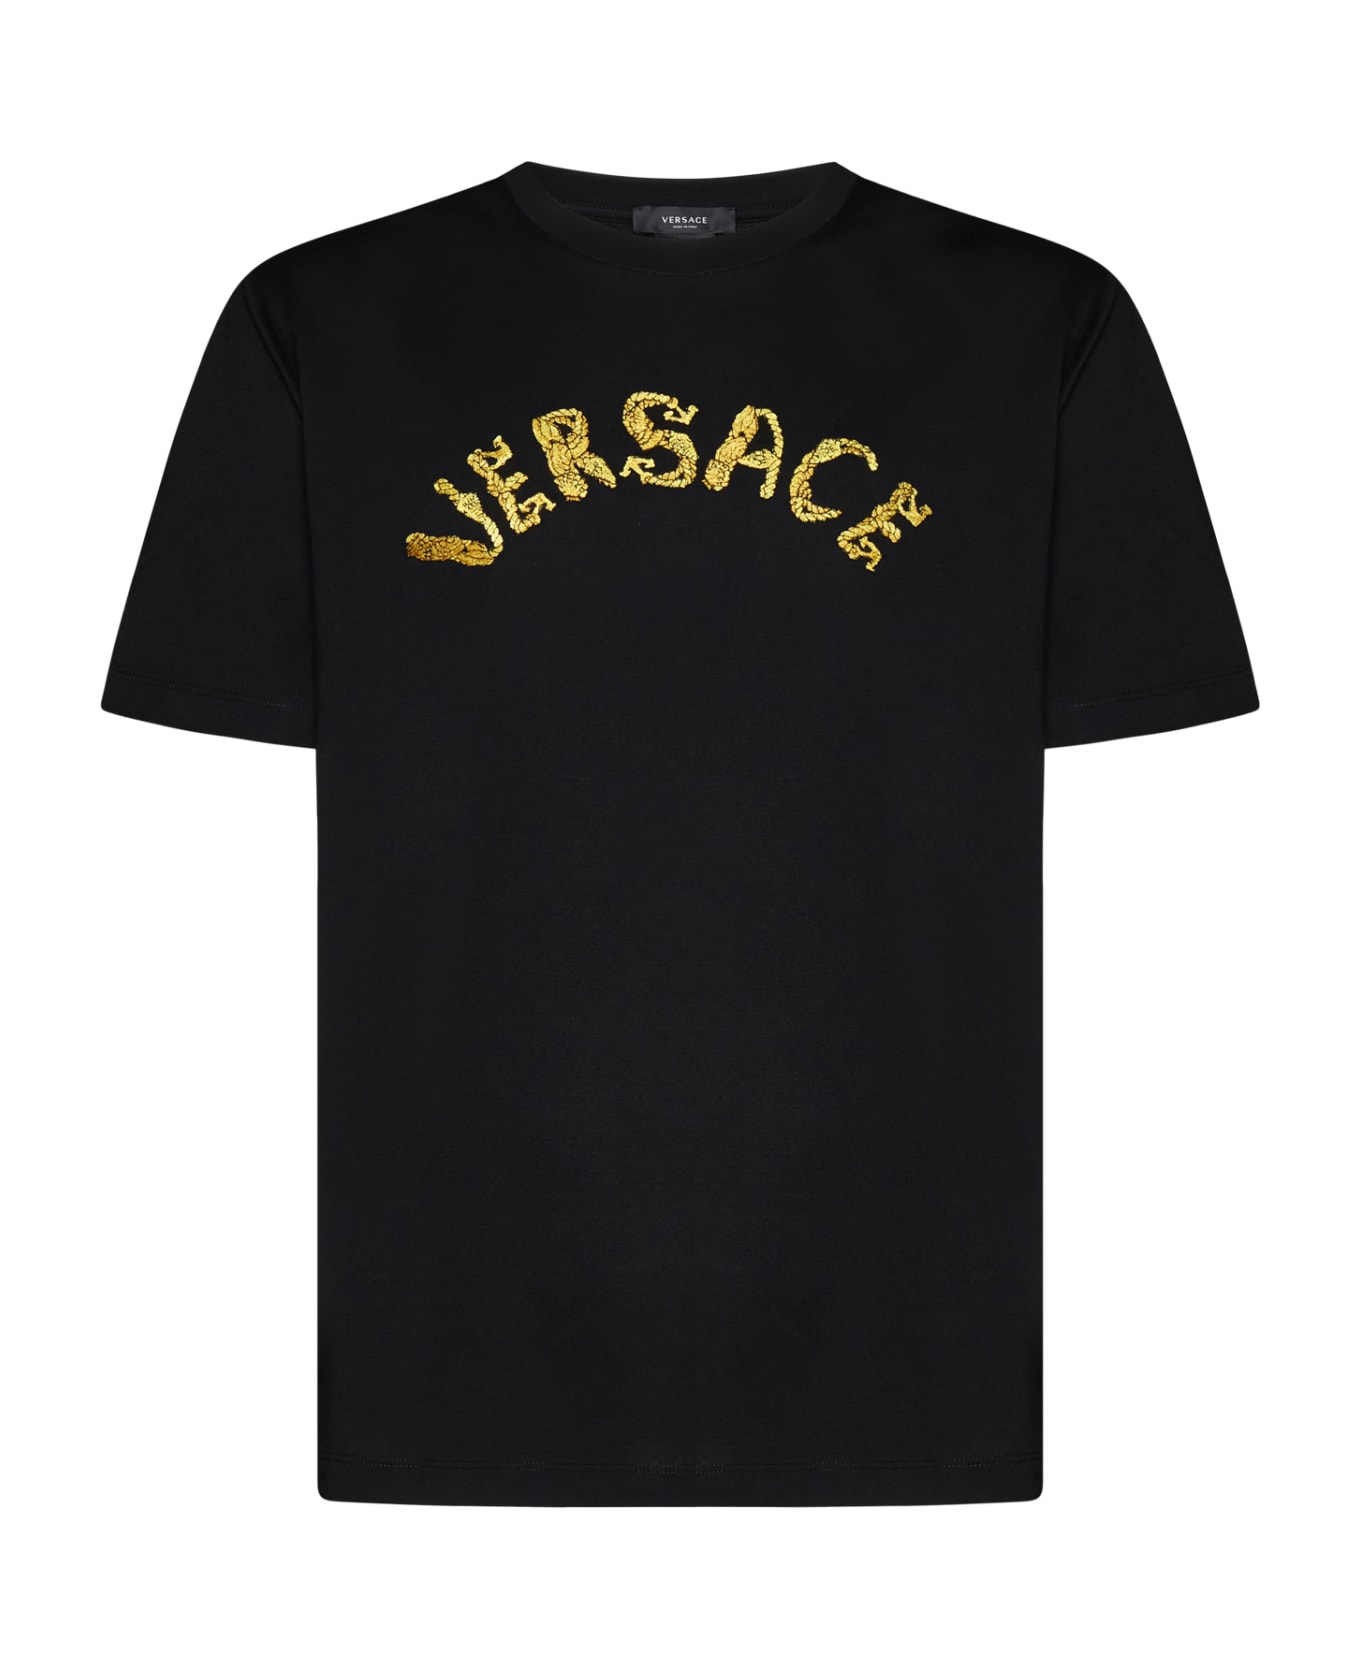 Versace T-Shirt - Black